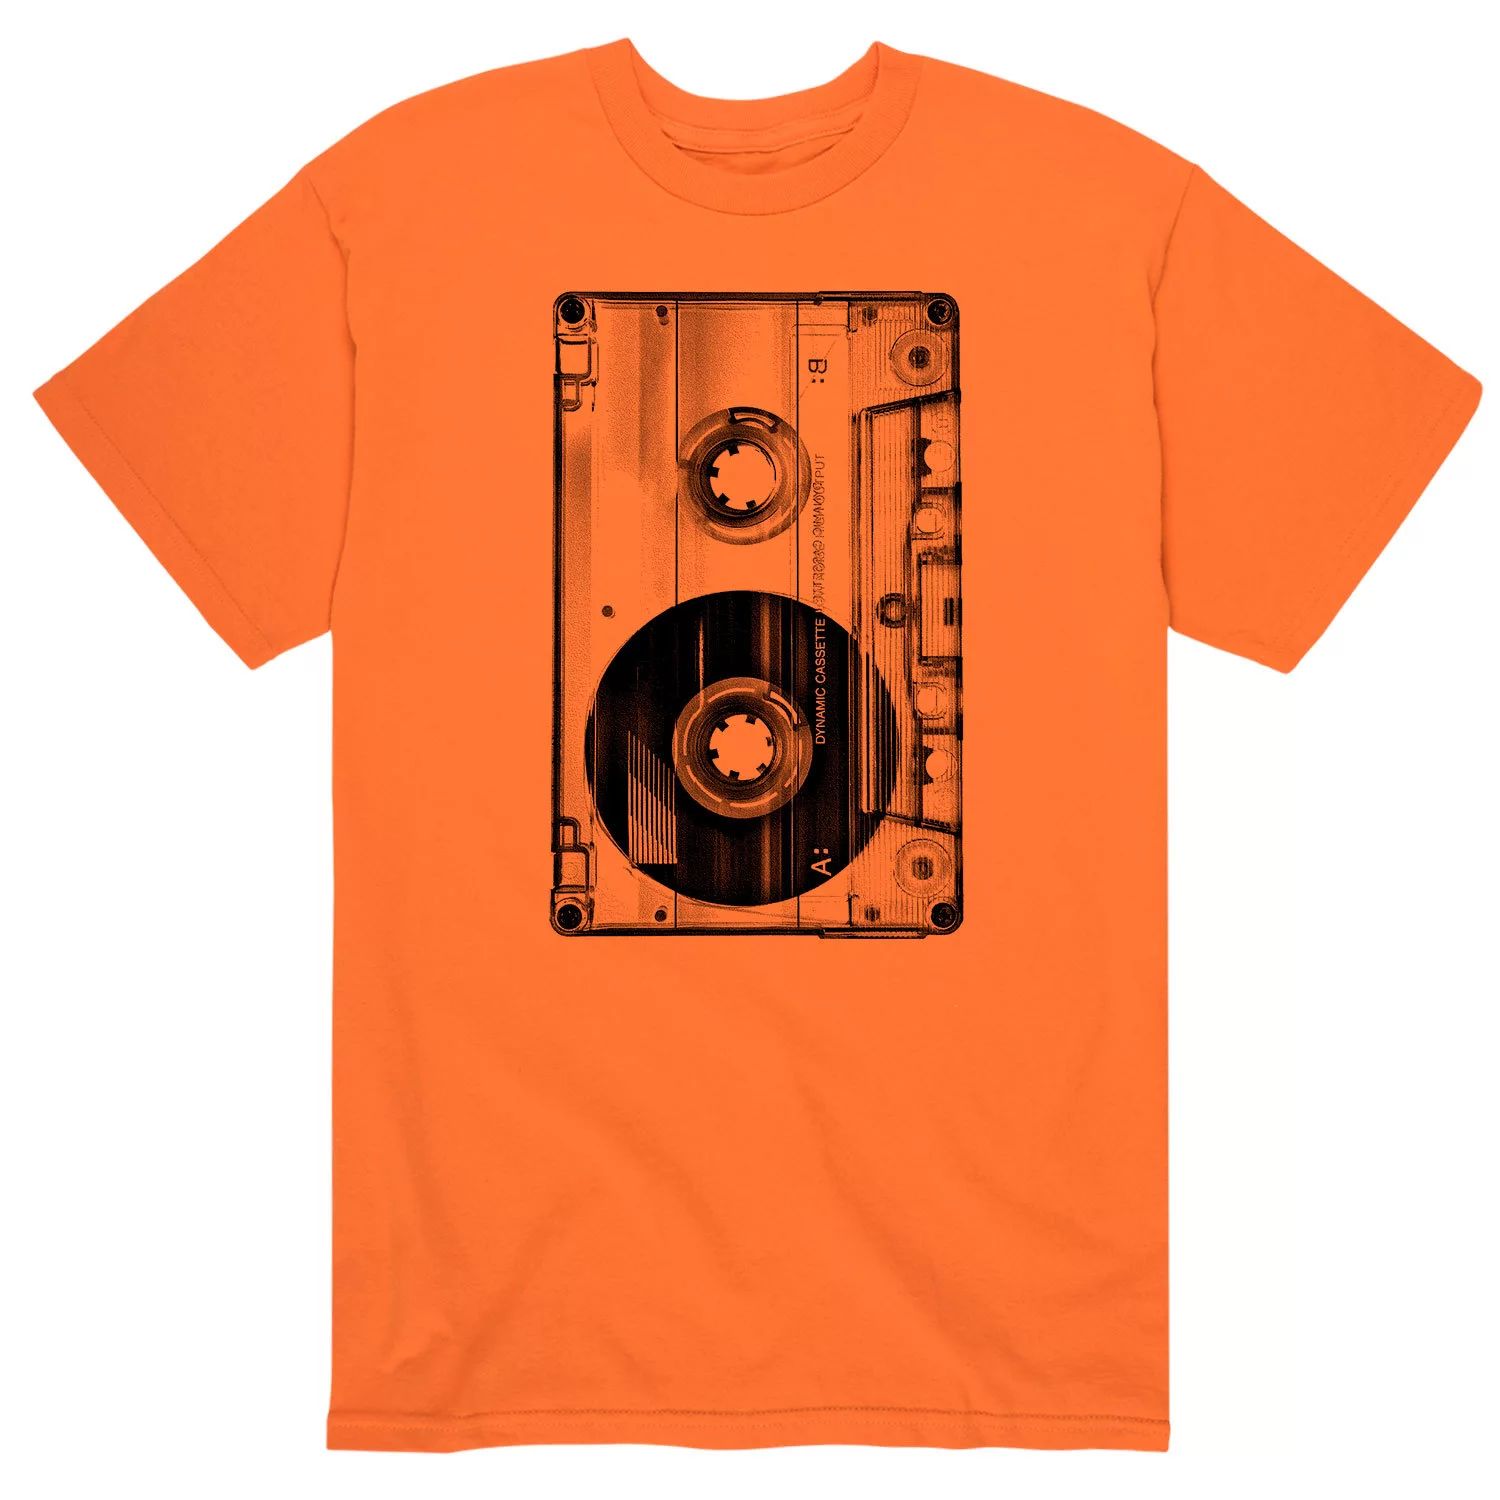 Мужская винтажная футболка с кассетами Licensed Character